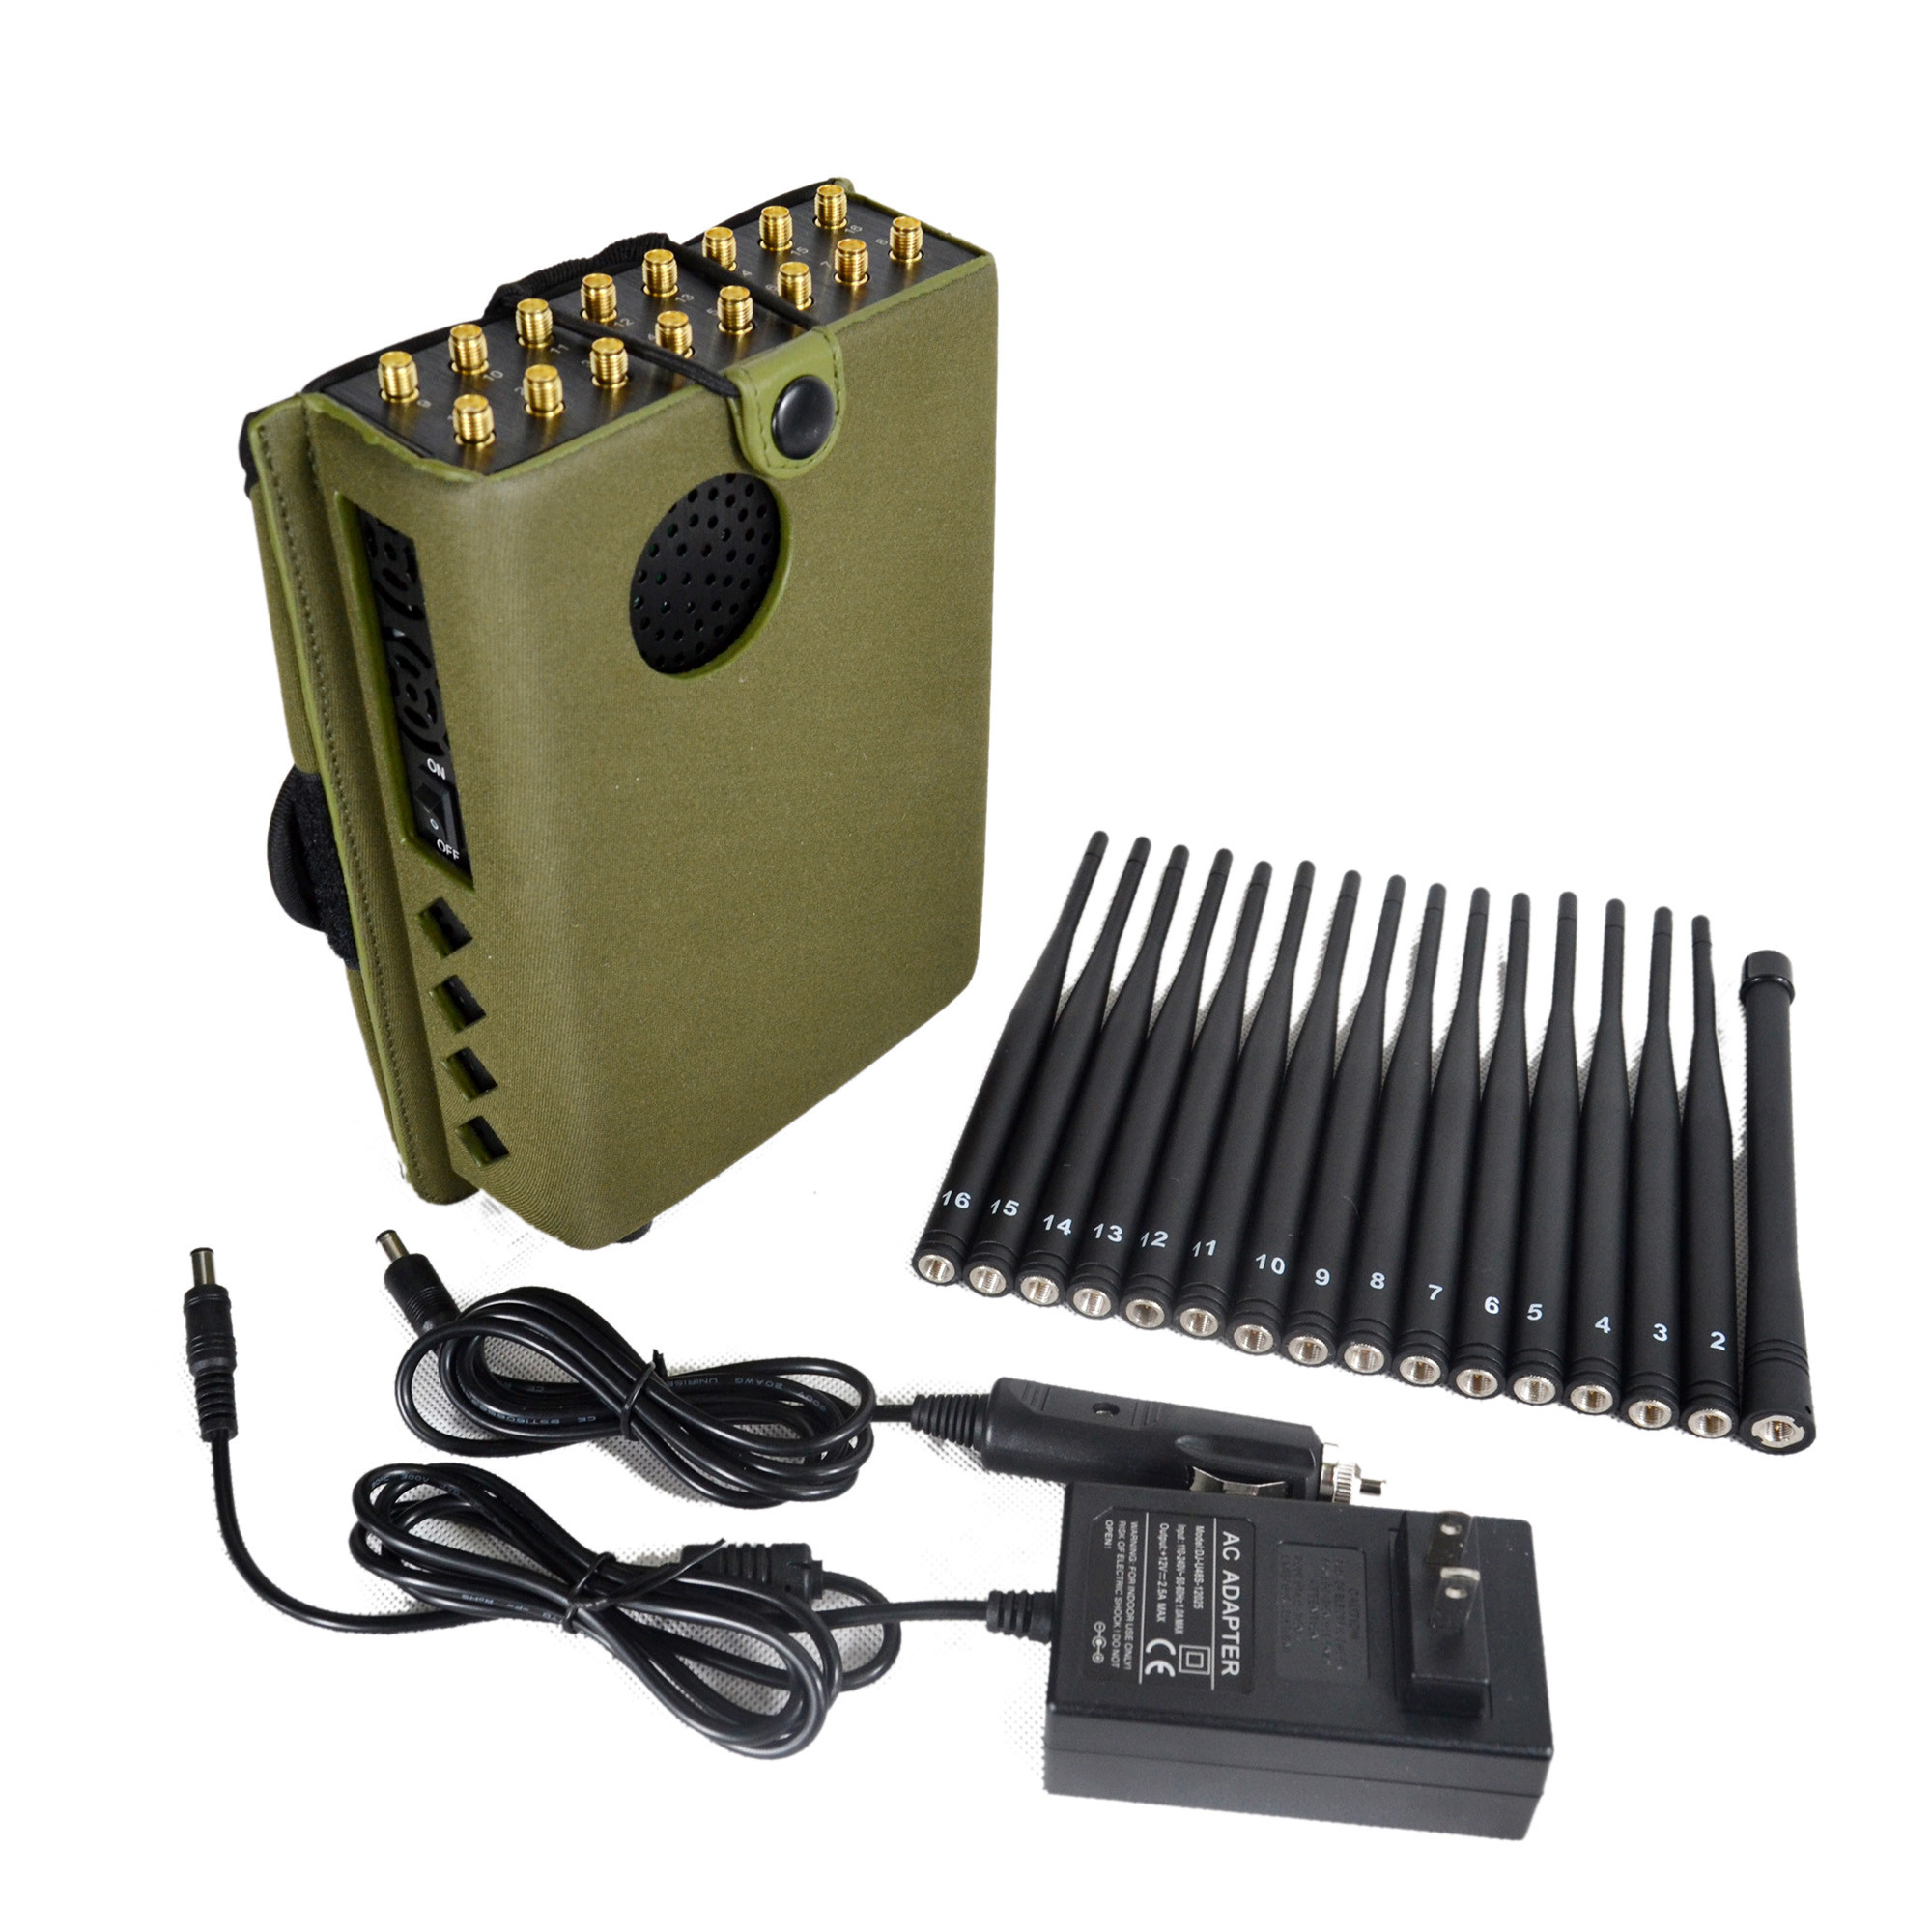 Bloqueador de sinal de celular 2,5dbi 40m 16 bandas DCS PCS VHF LOJACK DCS PCS